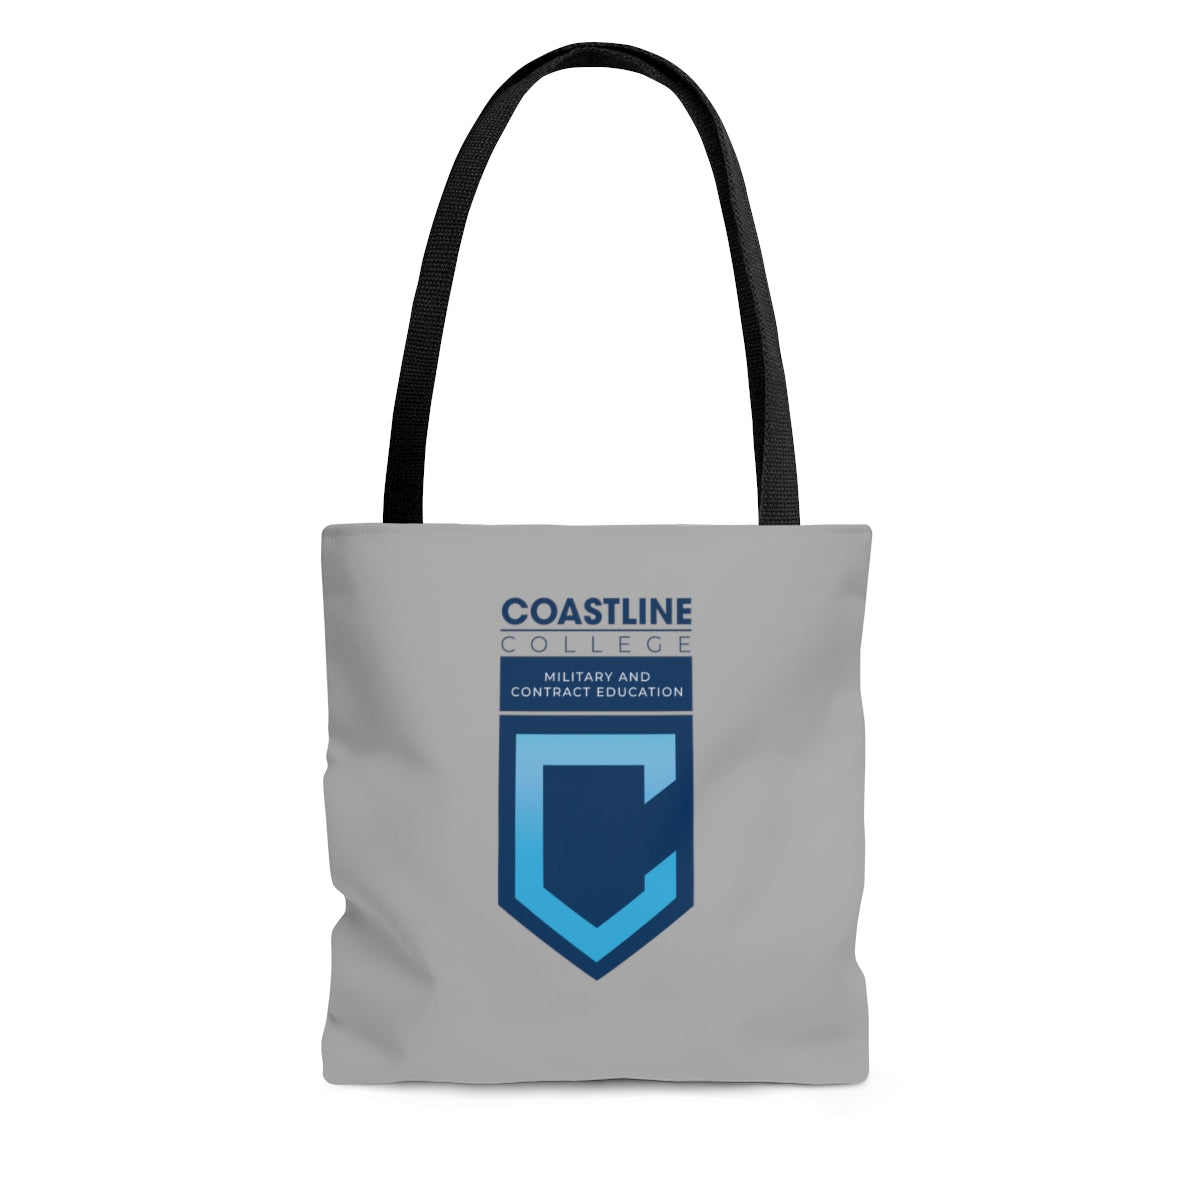 Coastline Military & Contract Ed AOP Tote Bag